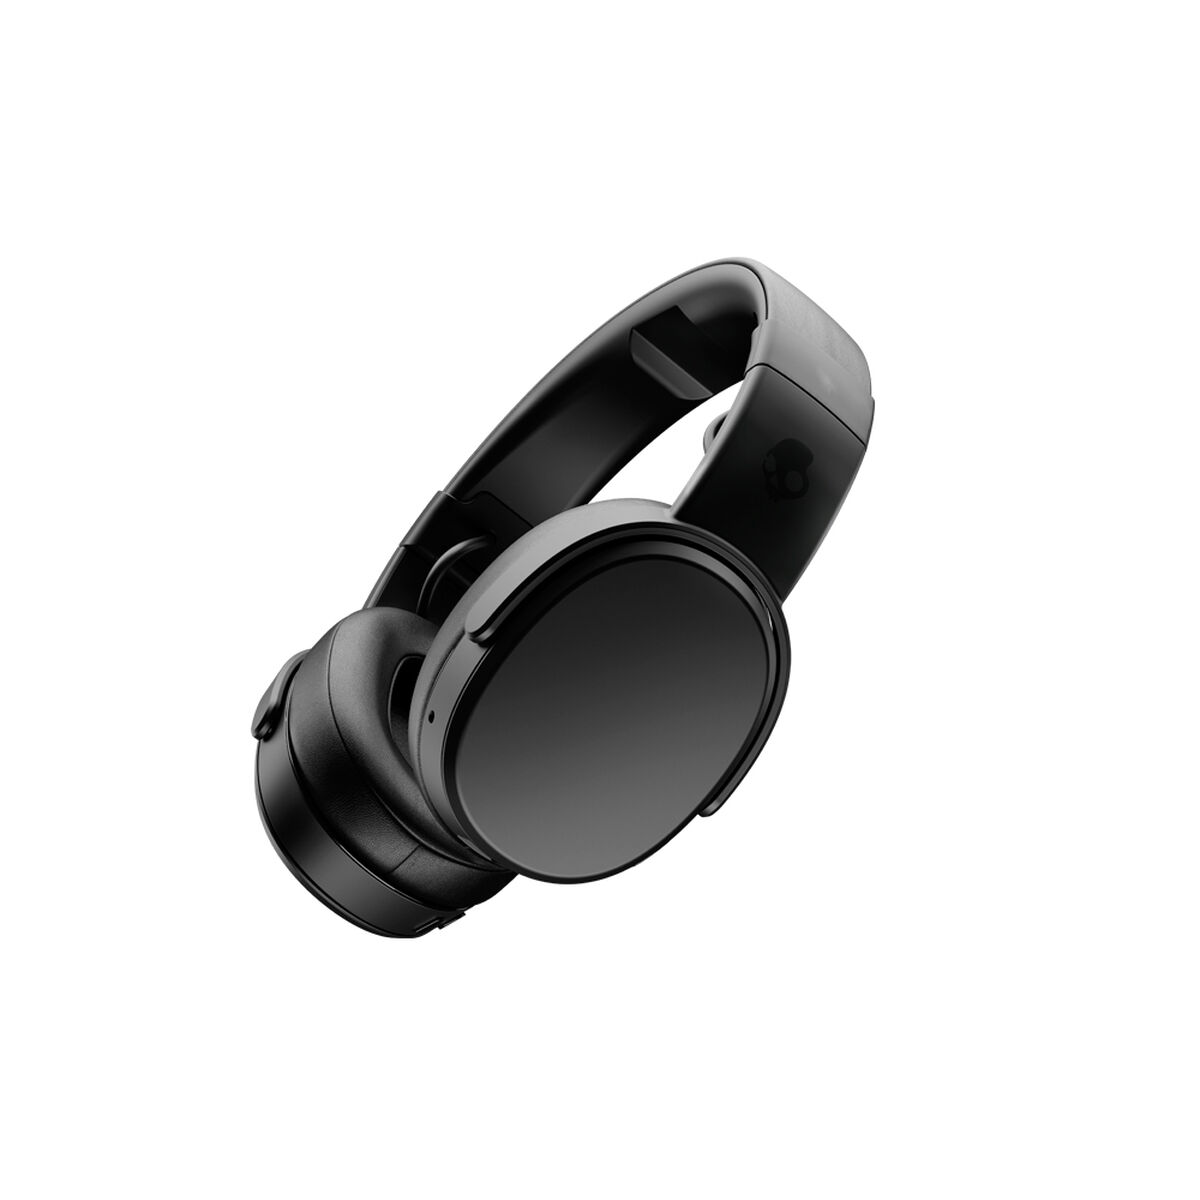 Audífonos Bluetooth Over Ear Skullcandy S6CRW-K591 Negros